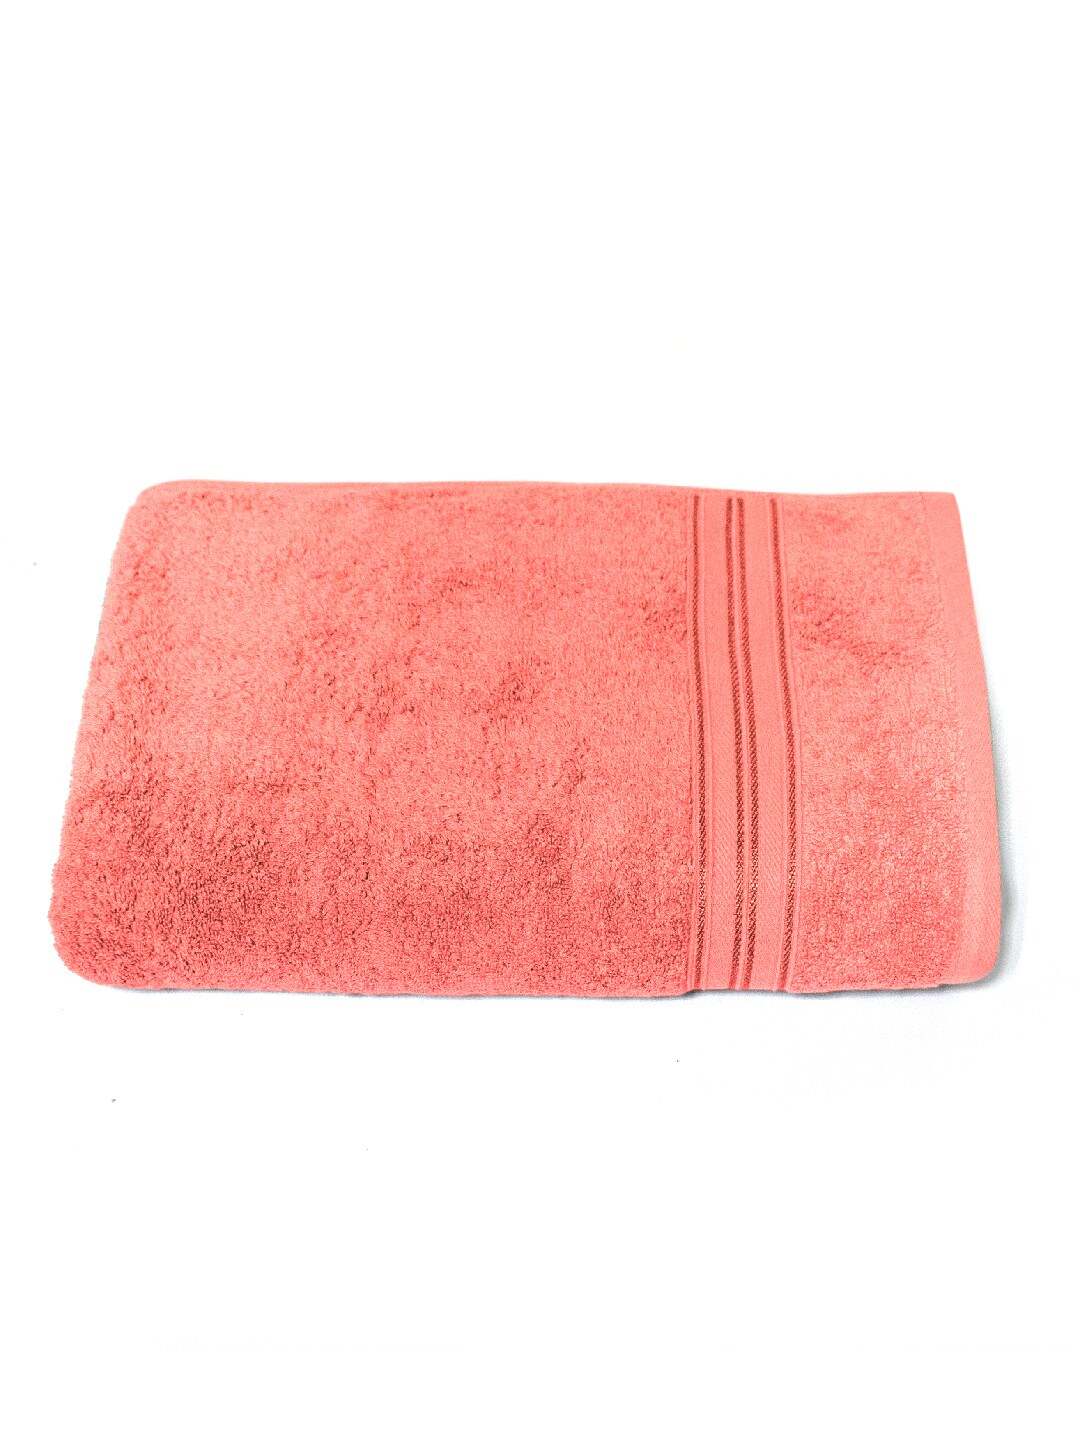 swiss republic Peach Cotton 600 GSM Bath Towel Price in India